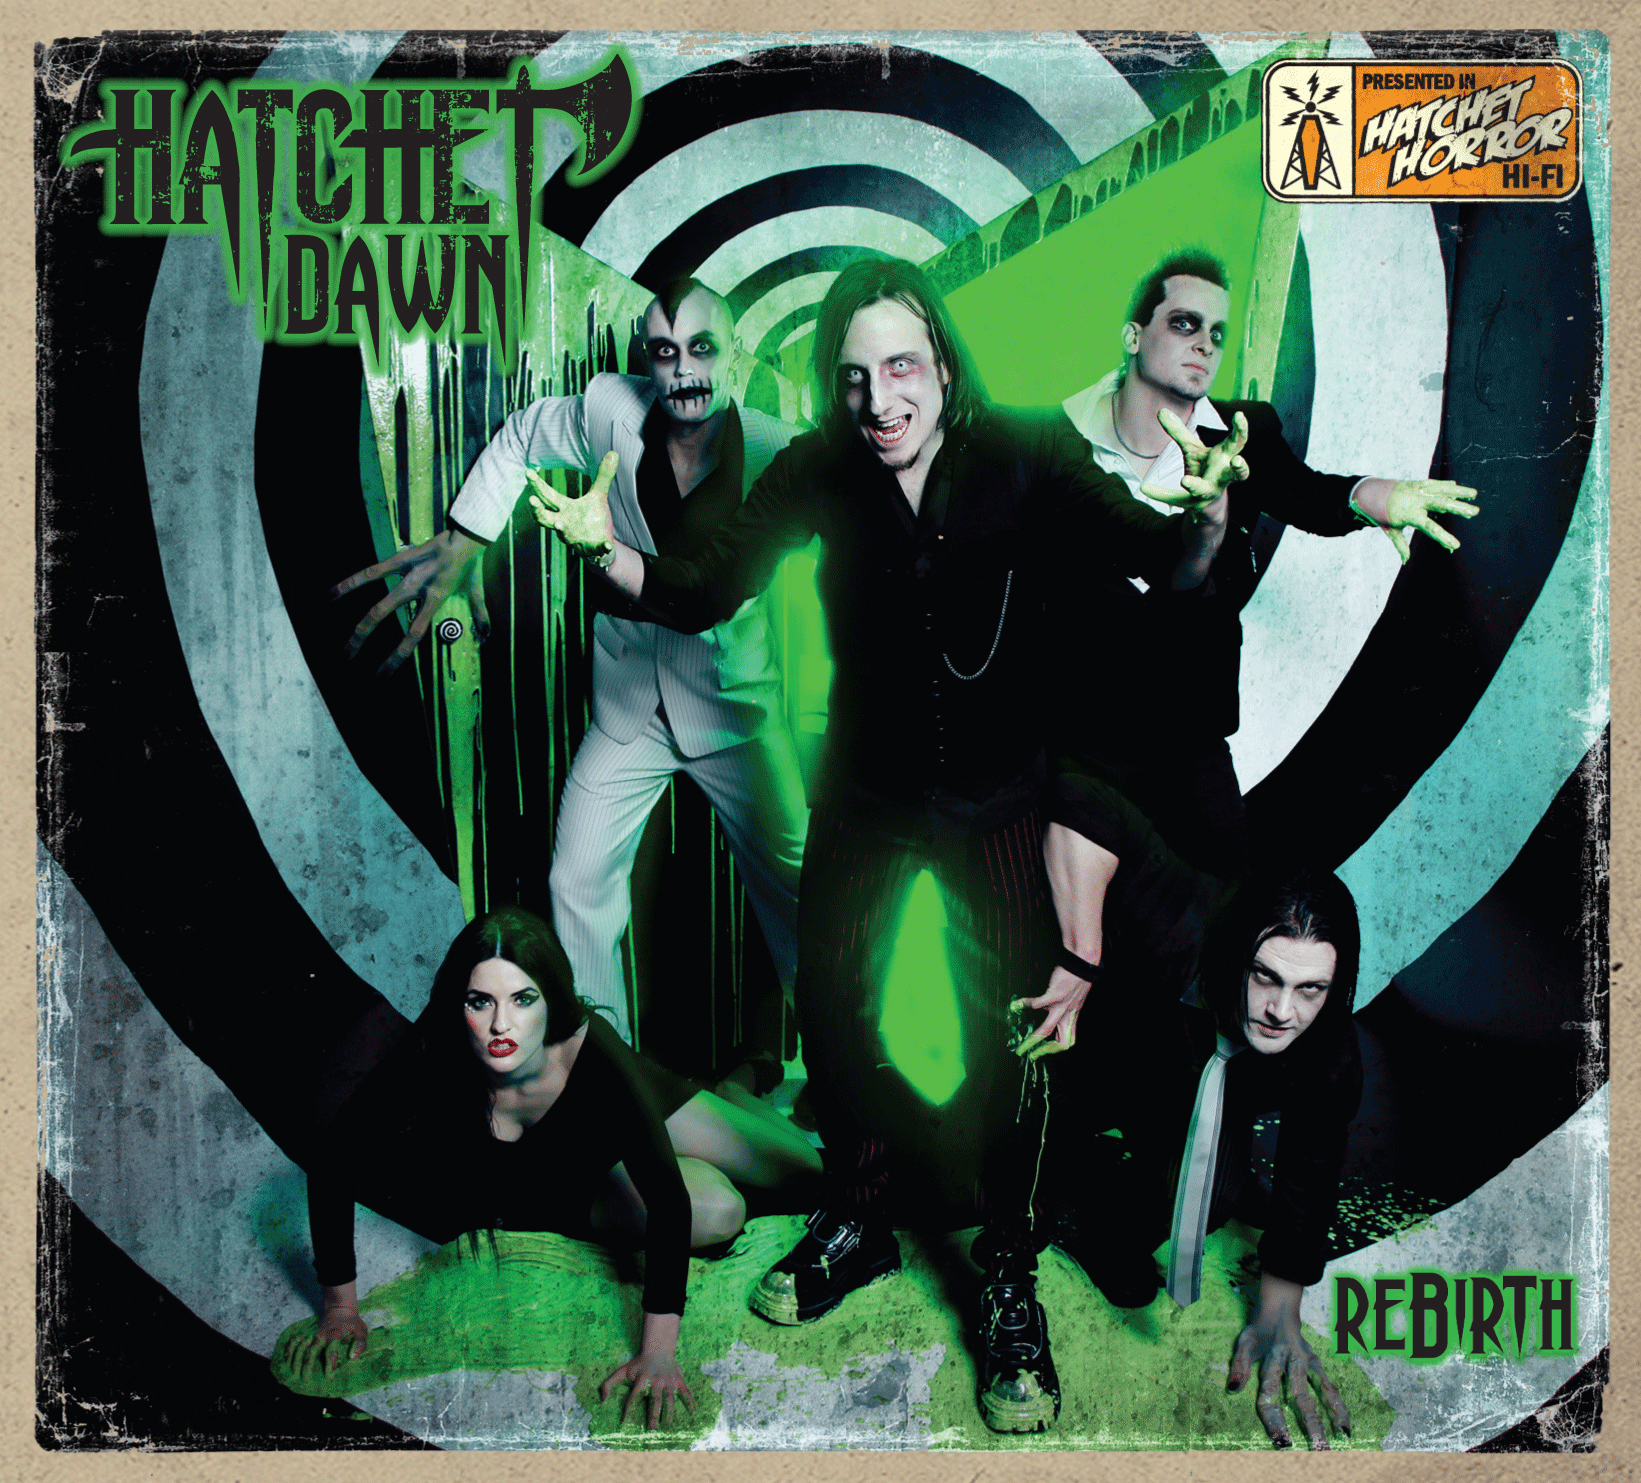 hatchet-dawn-rebirth-cover-final.jpg